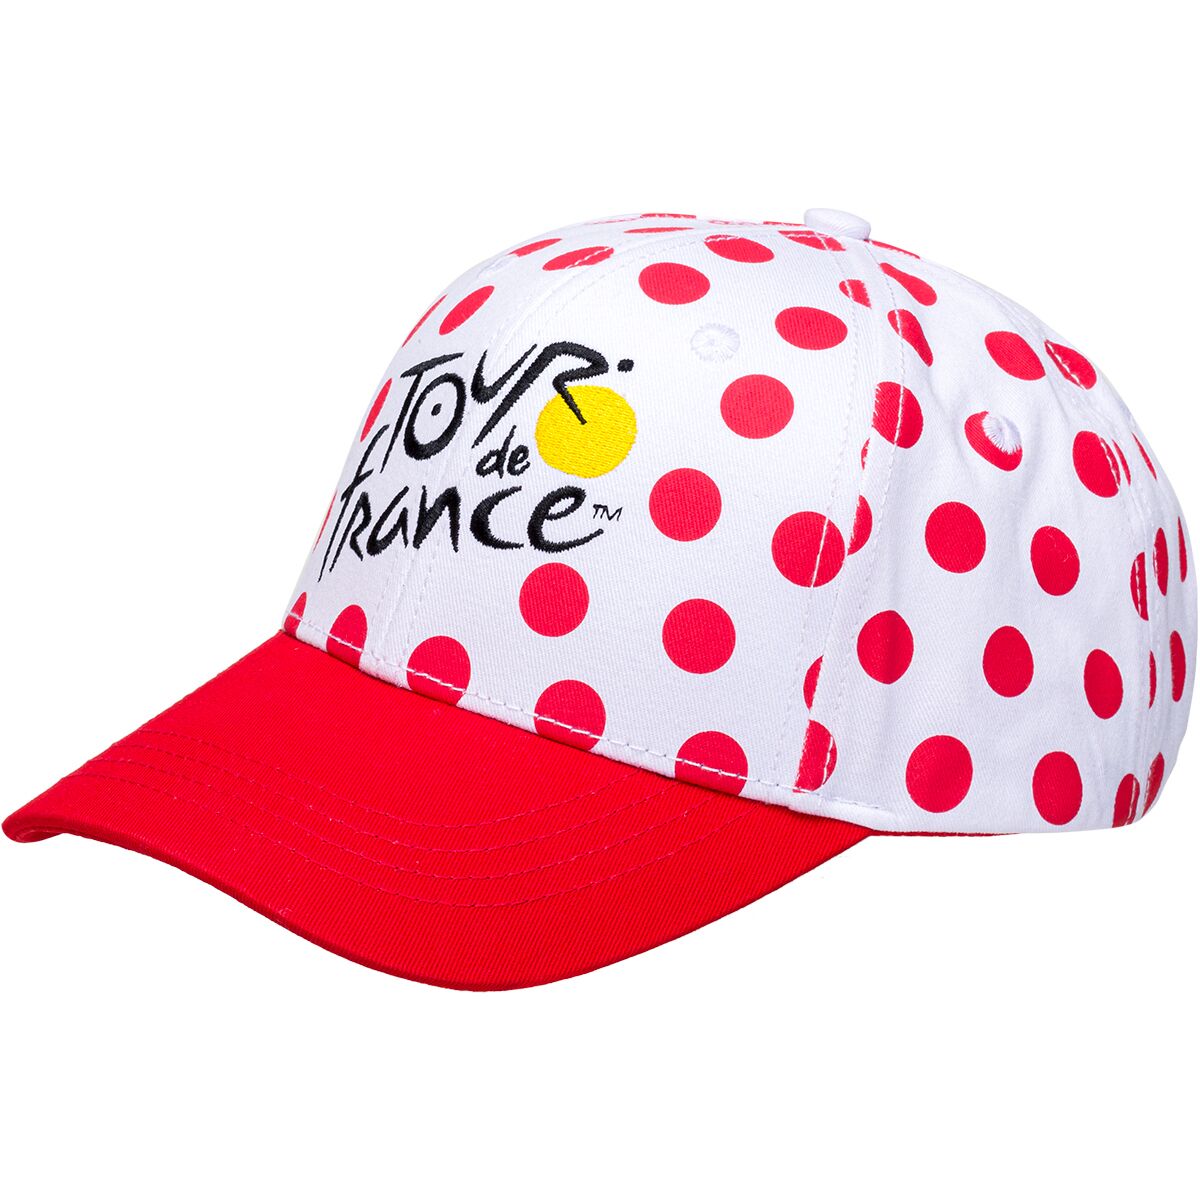 Tour de France Polka Dot Cap